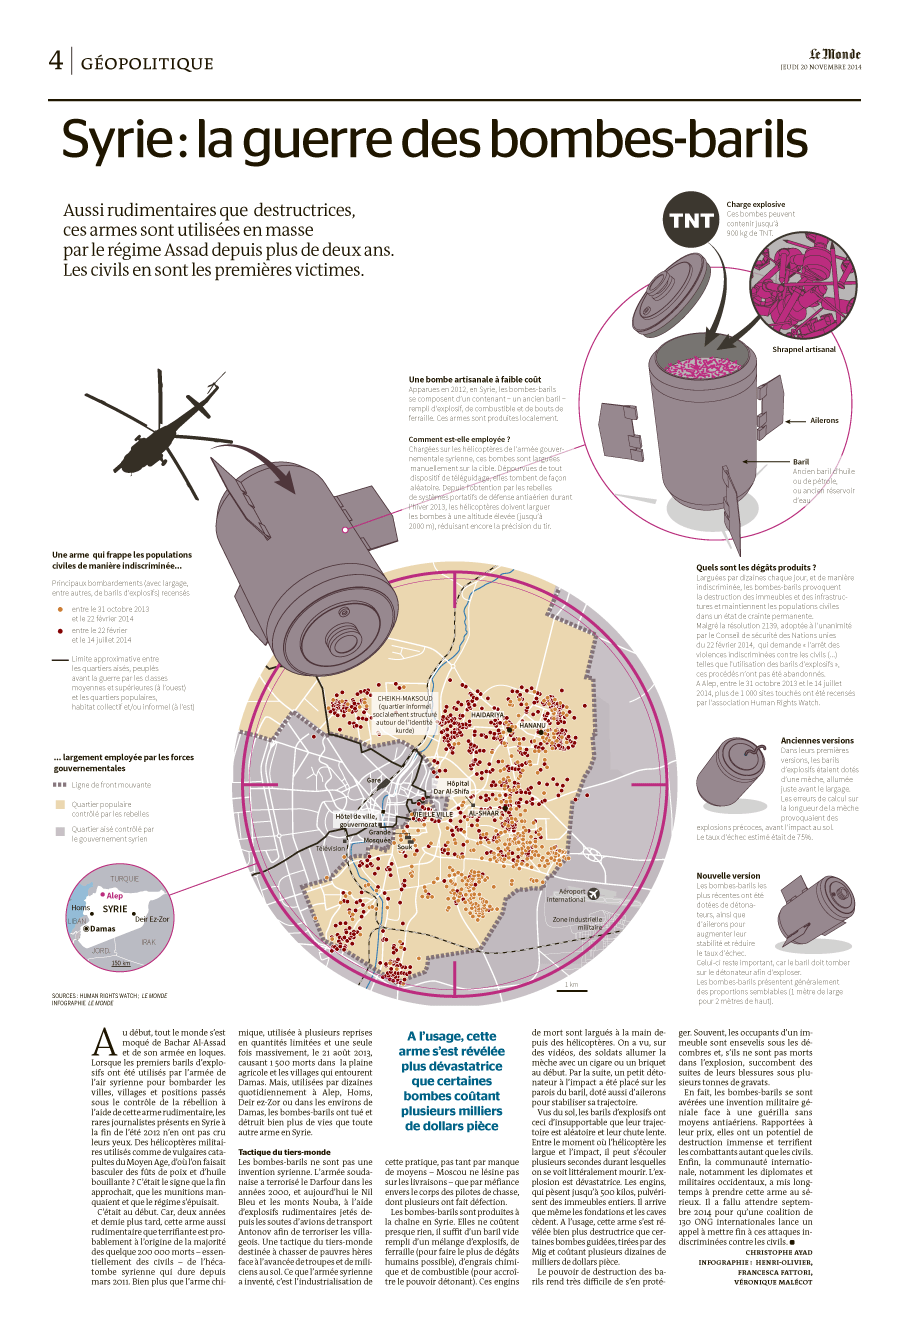 Infographie : les bombes-barils en Syrie